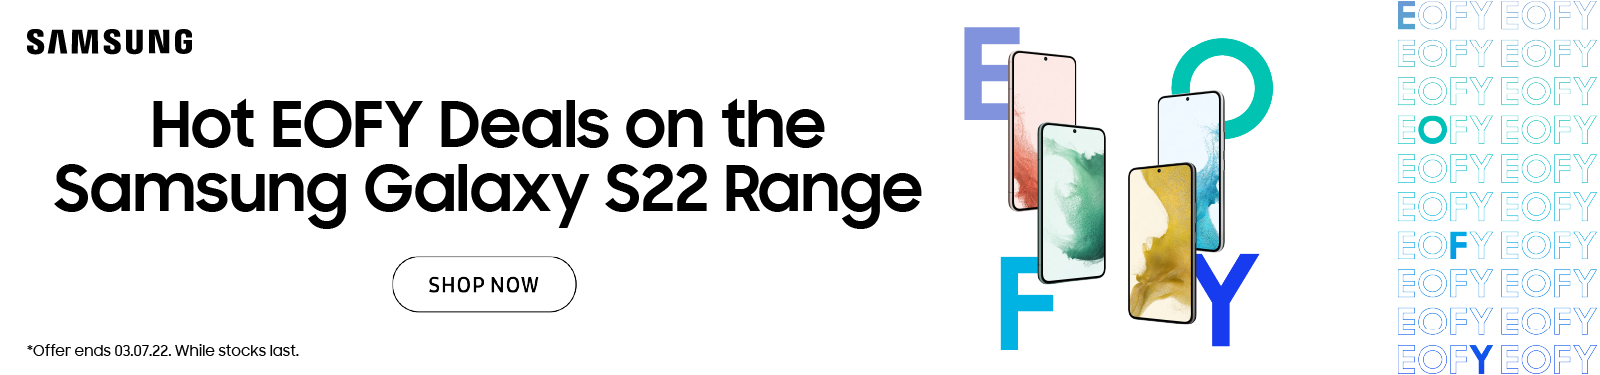 Hot EOFY Deals On The Samsung Galaxy S22 Range at Retravision